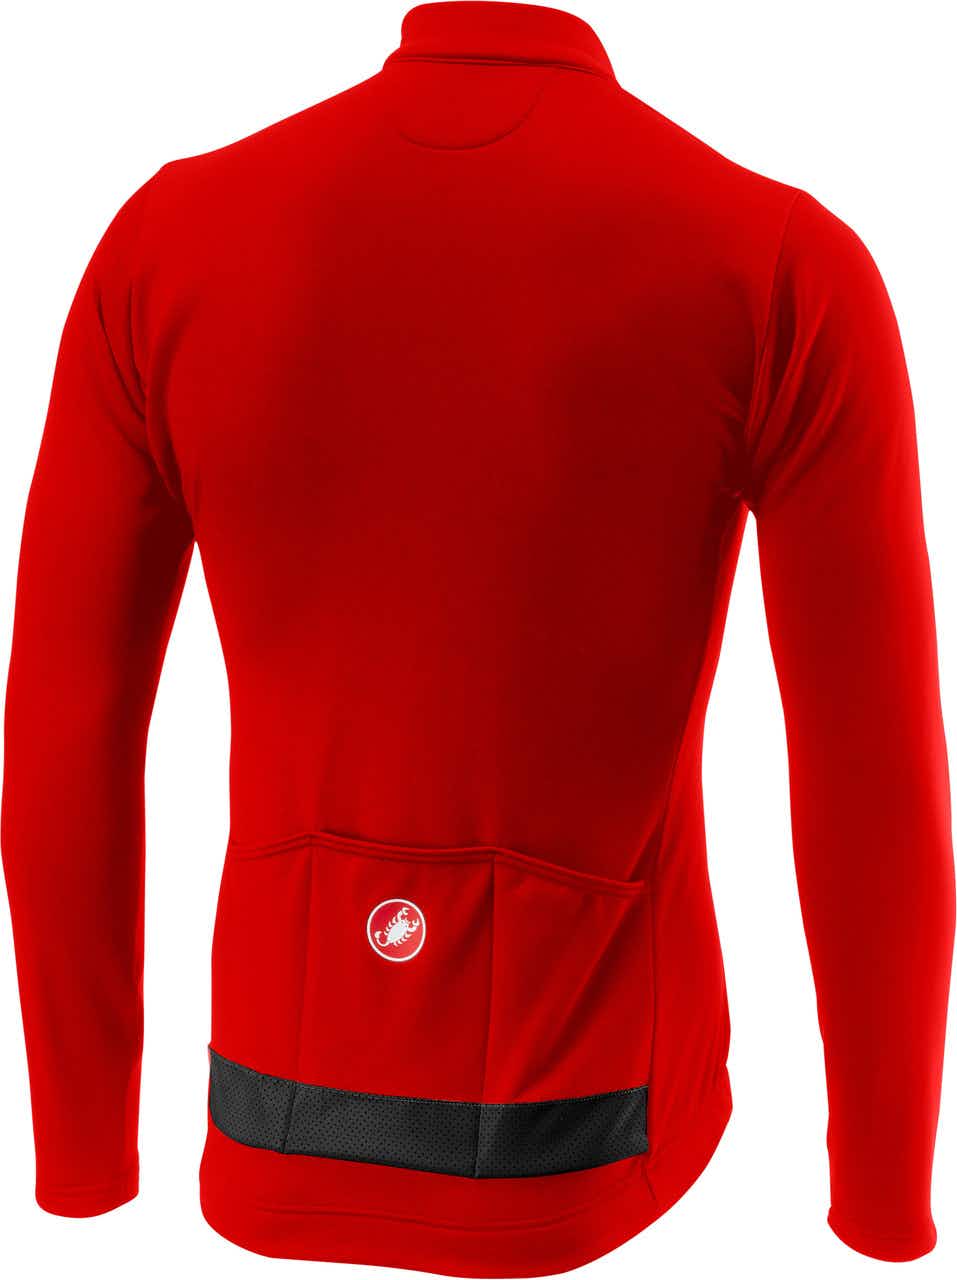 Puro 3 Long Sleeve Full-Zip Jersey Red